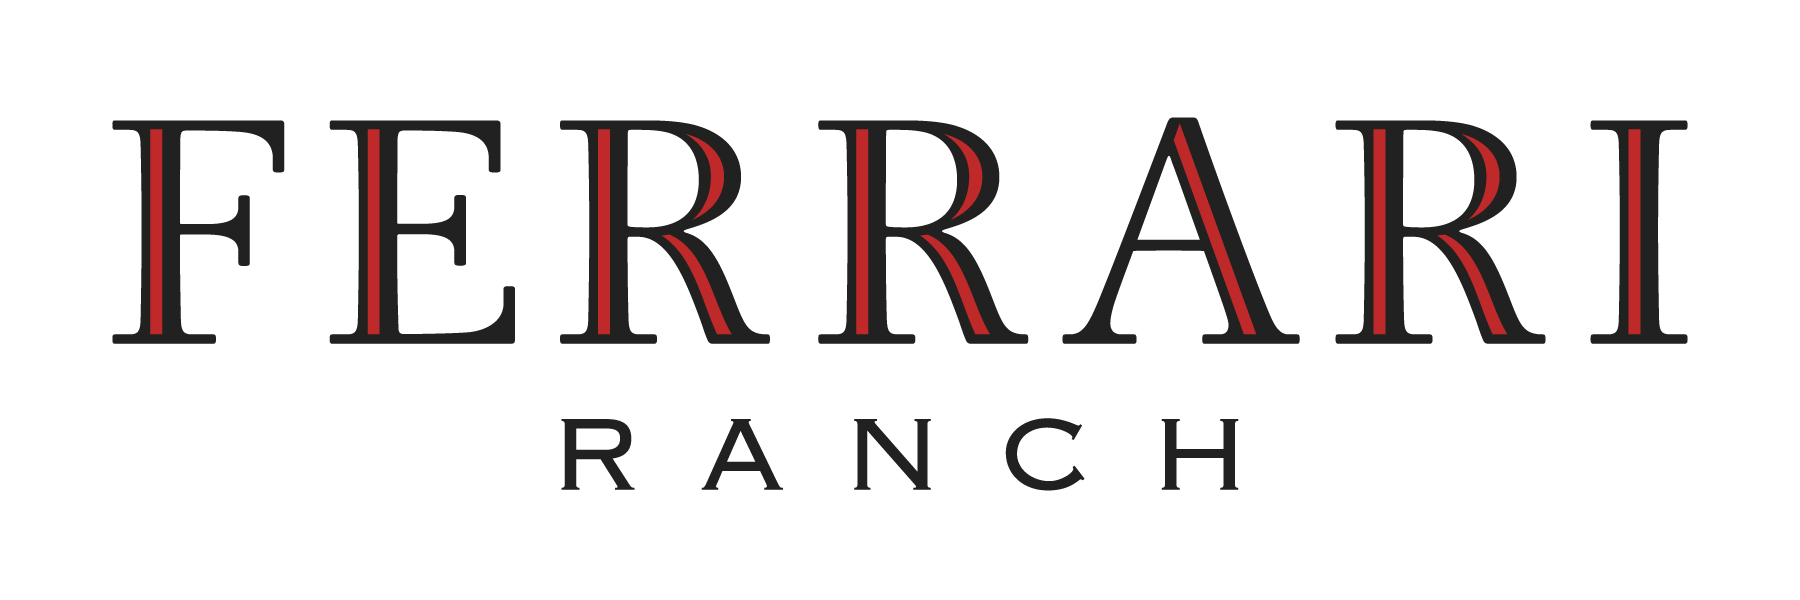 Ferrari Ranch